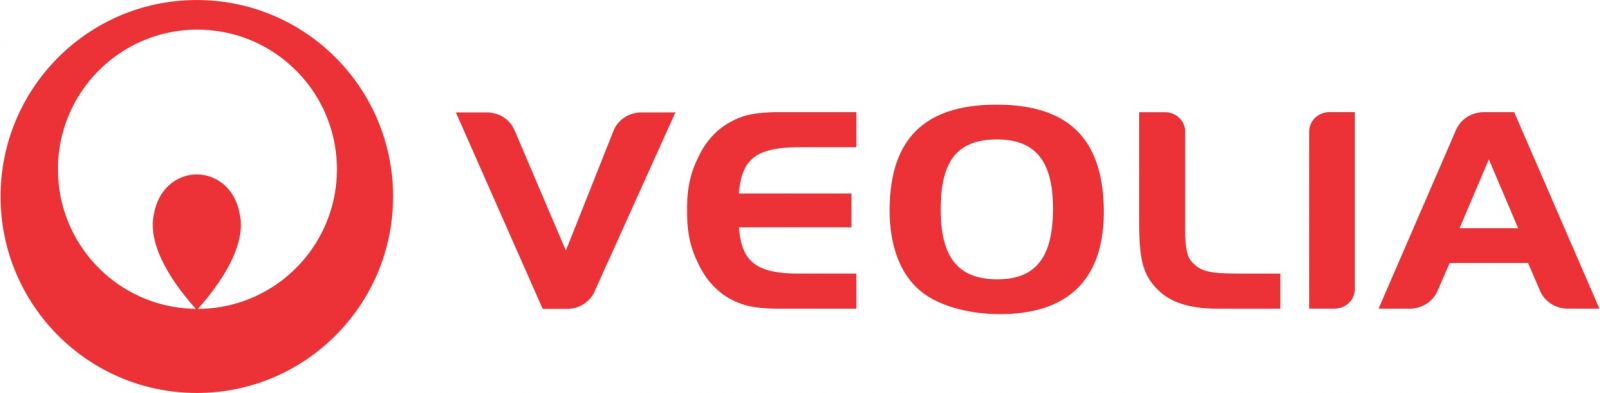 logo Veolia simplu